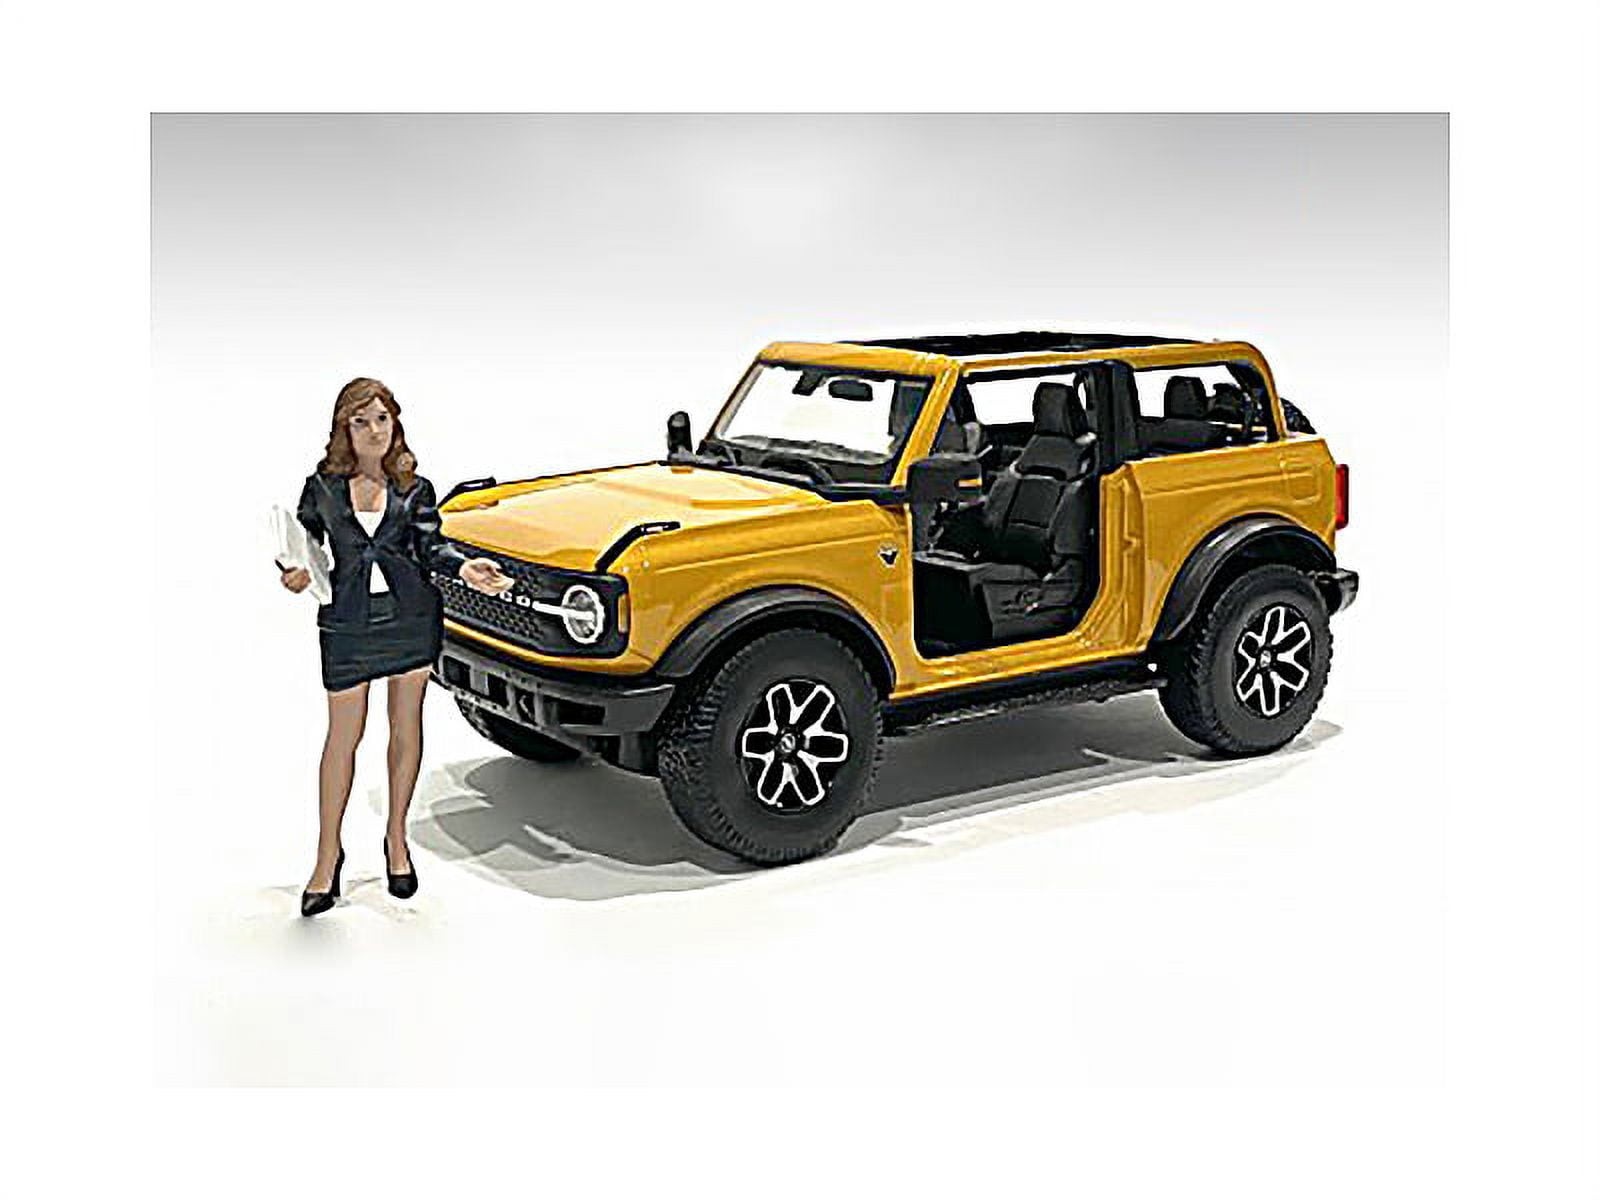 Picture of American Diorama 76310 1-18 Scale The Dealership Female Salesperson Figurine for Model